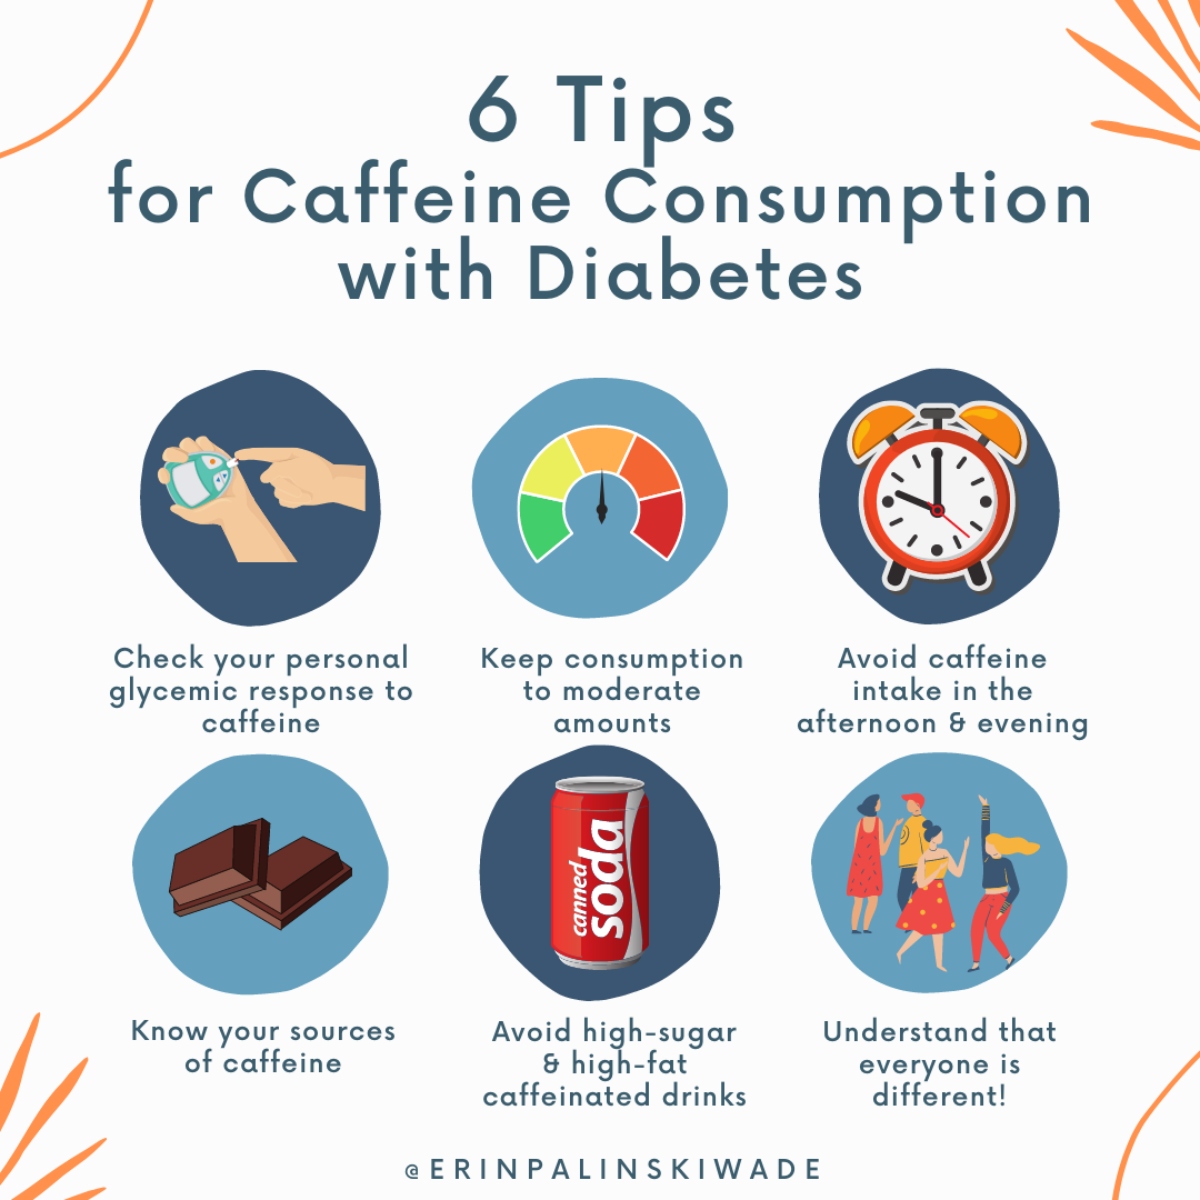 Can Caffeine Cause Low Blood Sugar?